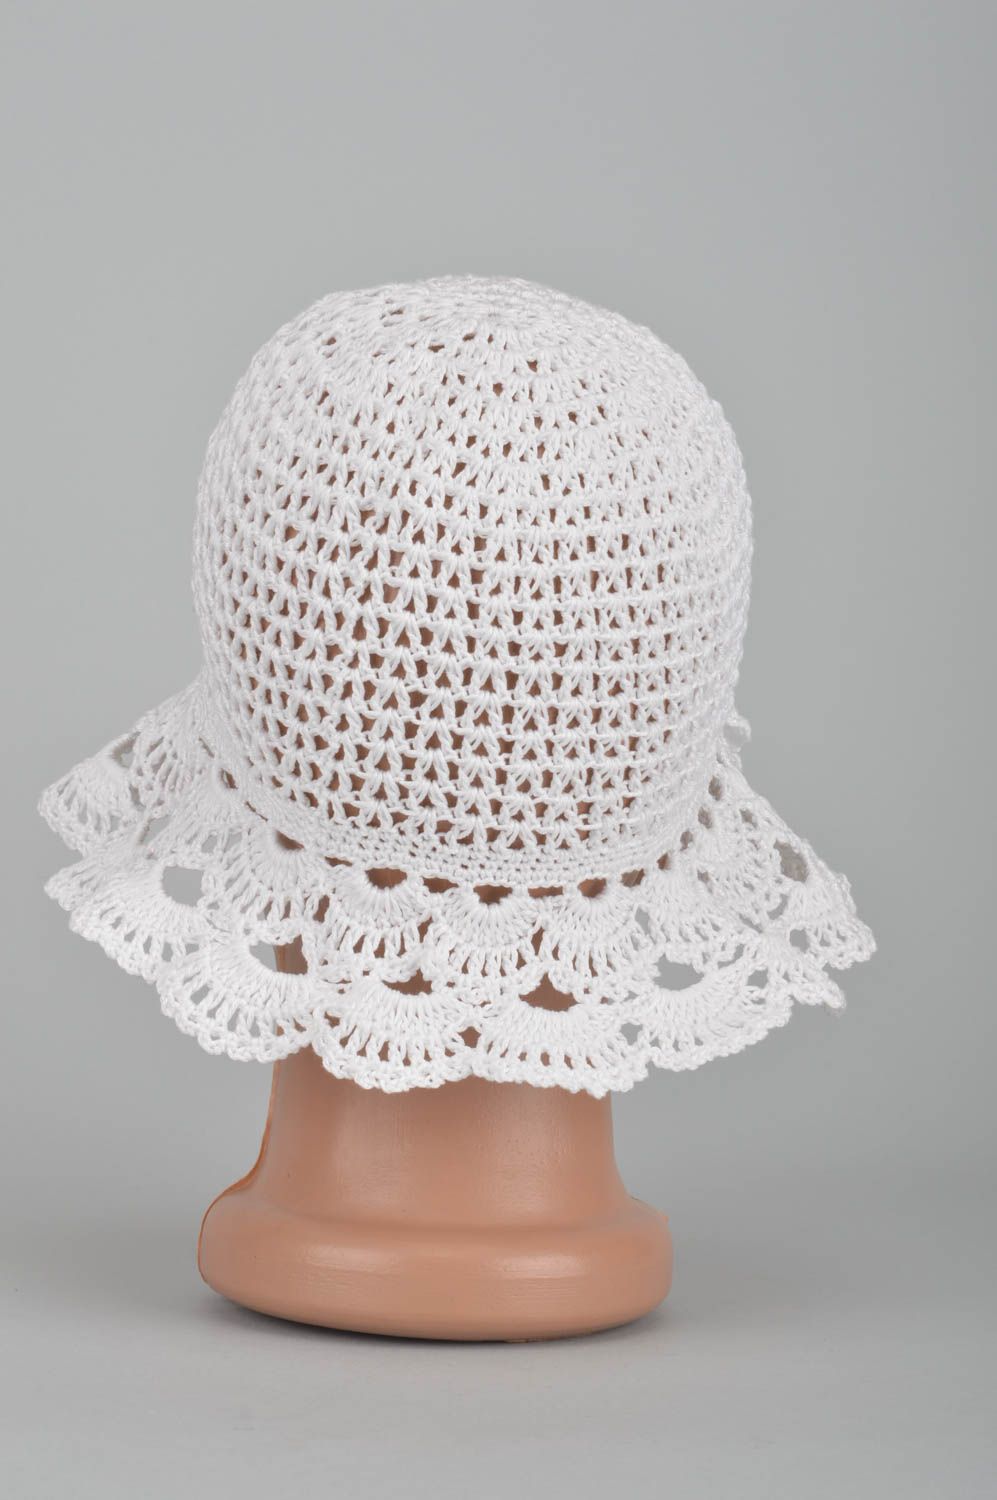 Stylish handmade crochet hat crochet ideas designer accessories for girls photo 5